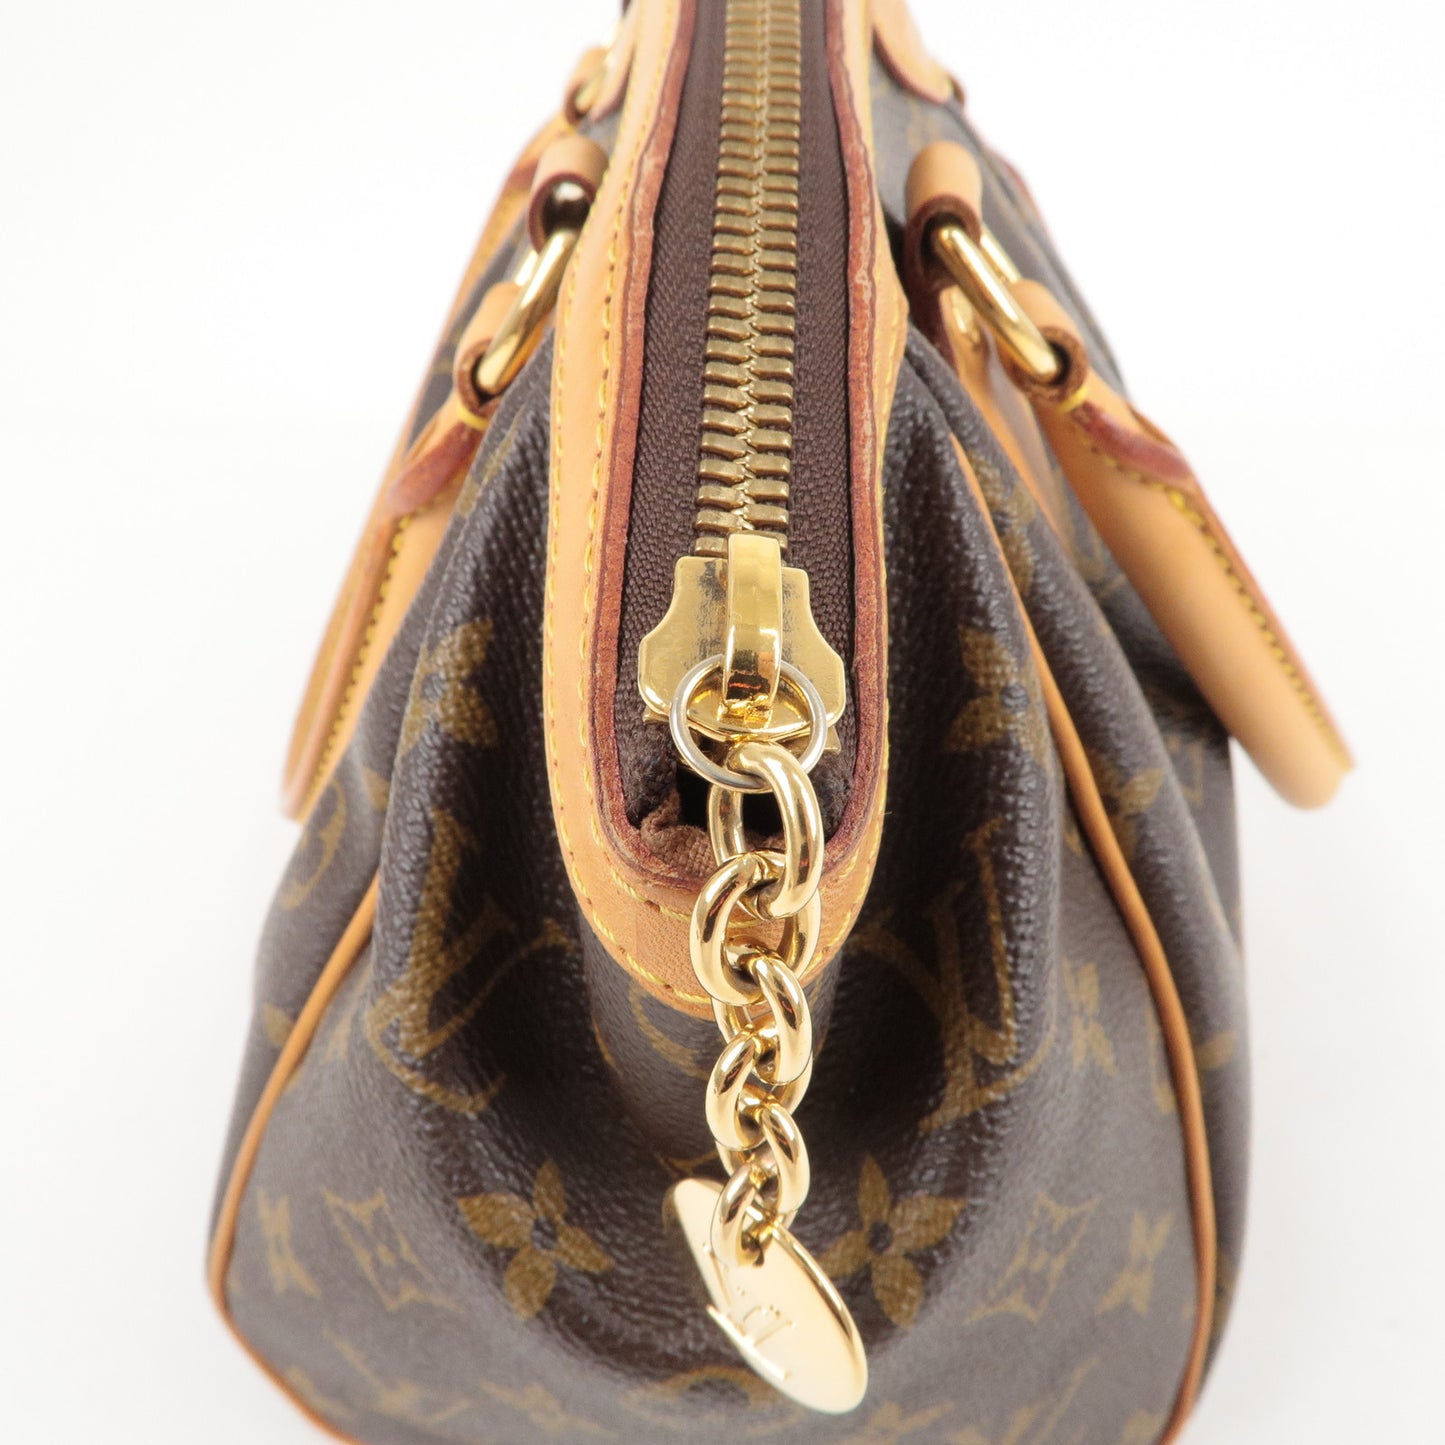 LOUIS VUITTON Tivoli PM Womens handbag M40143 For Sale at 1stDibs